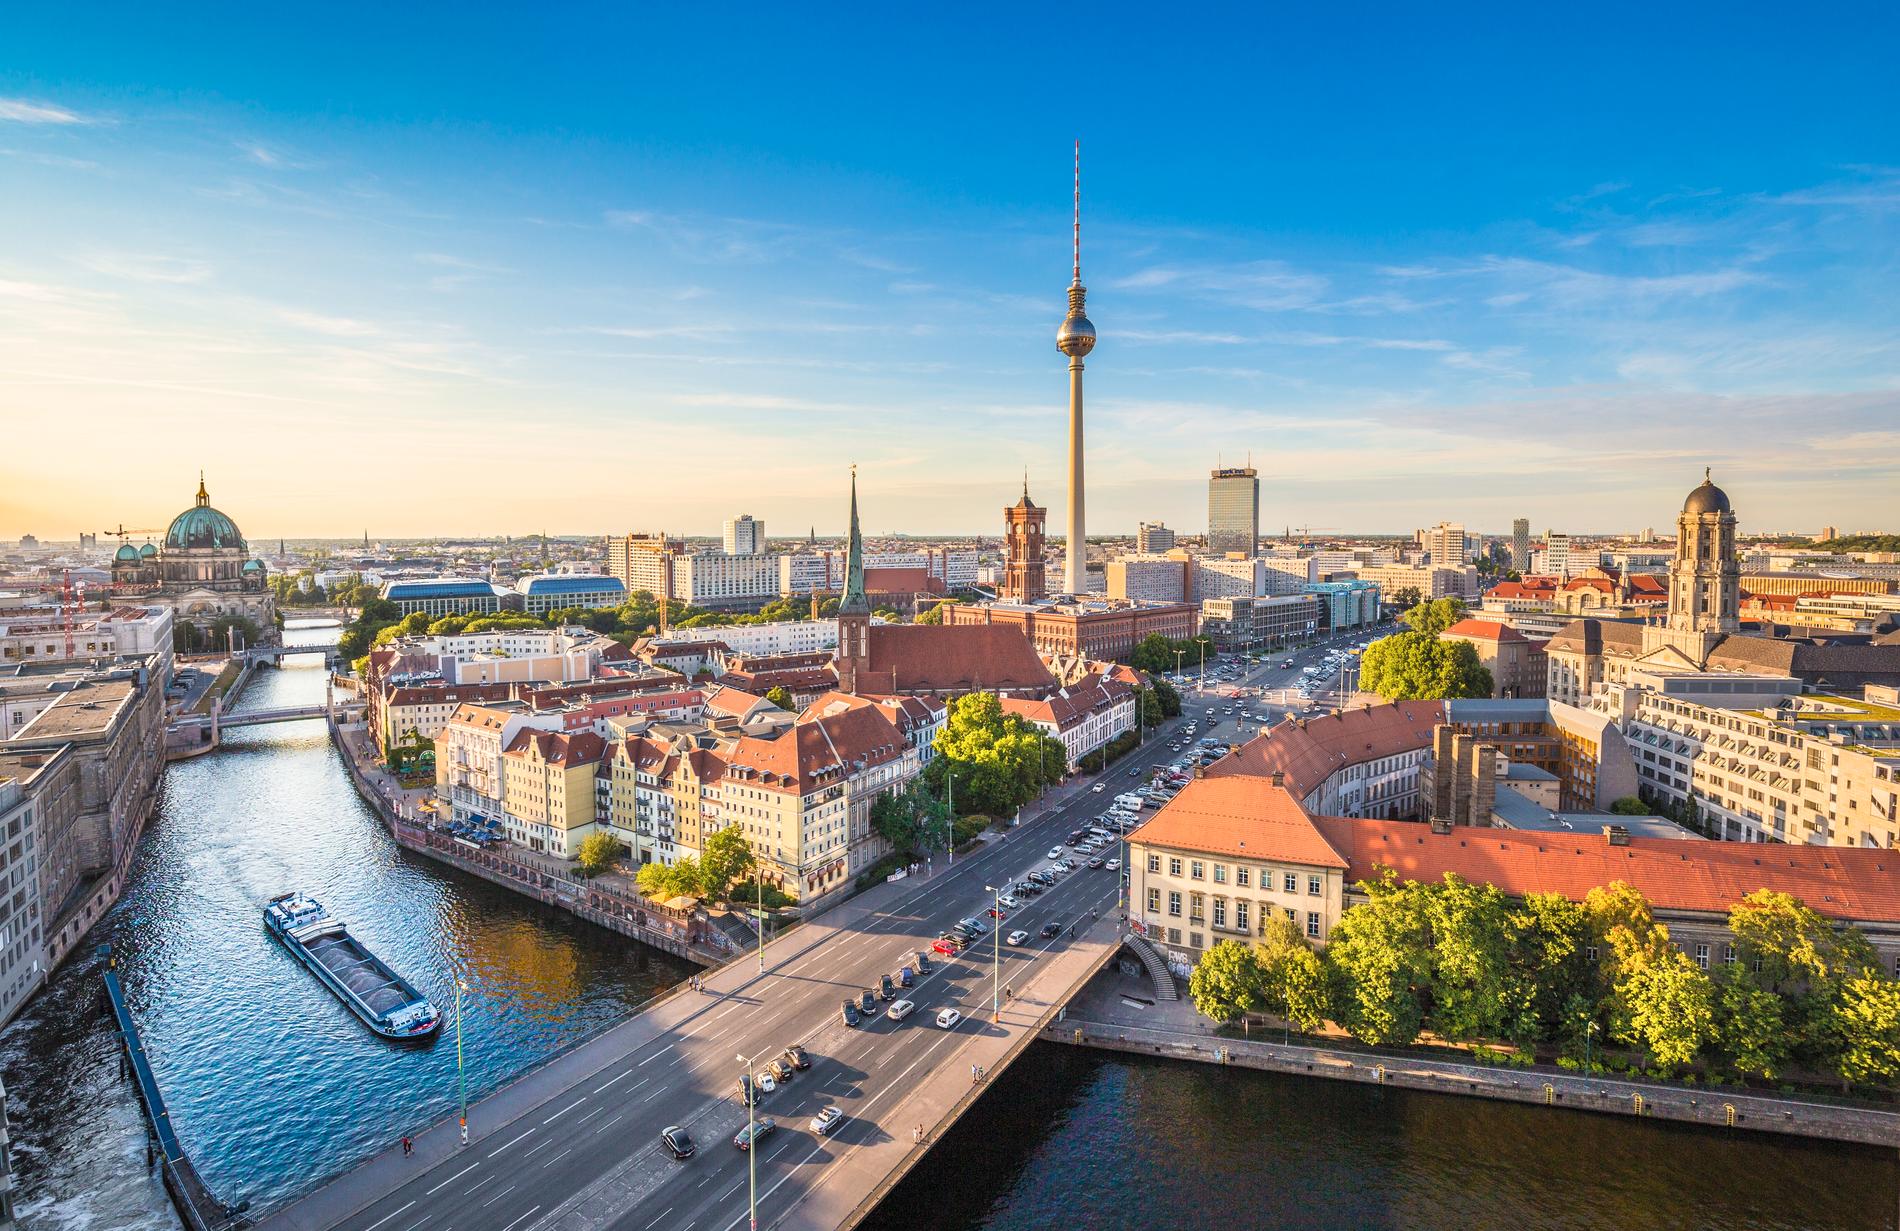 FINT I BERLIN: Den tyske hovedstaden er stor med mange bydeler. Mitte er spennende, nyoppusset bydel verdt et besøk, mener lokale berlinere.